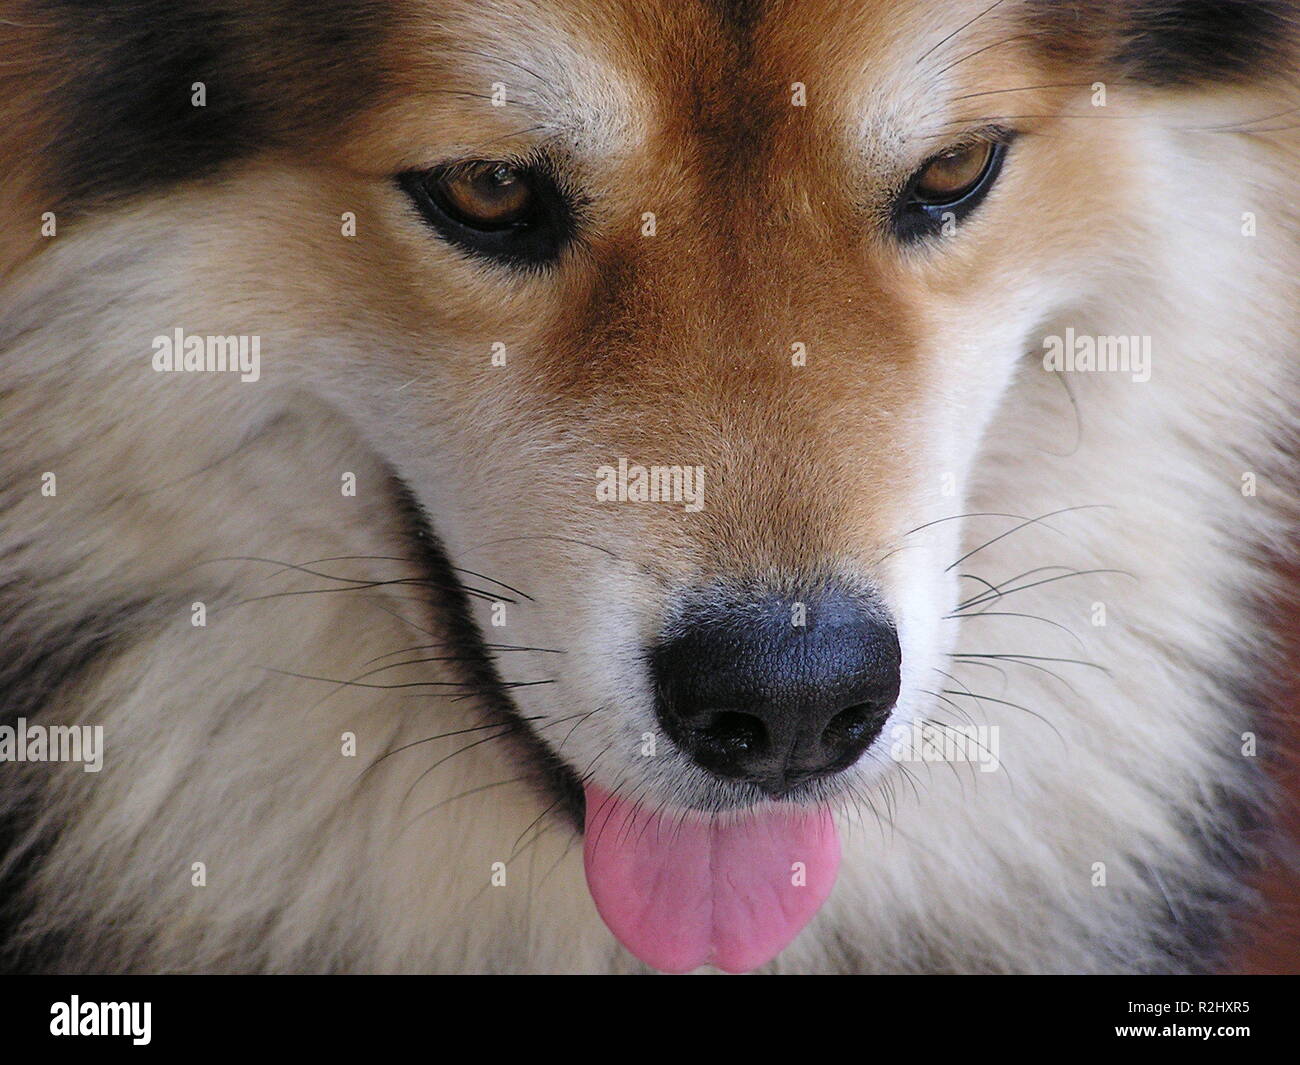 dog face Stock Photo